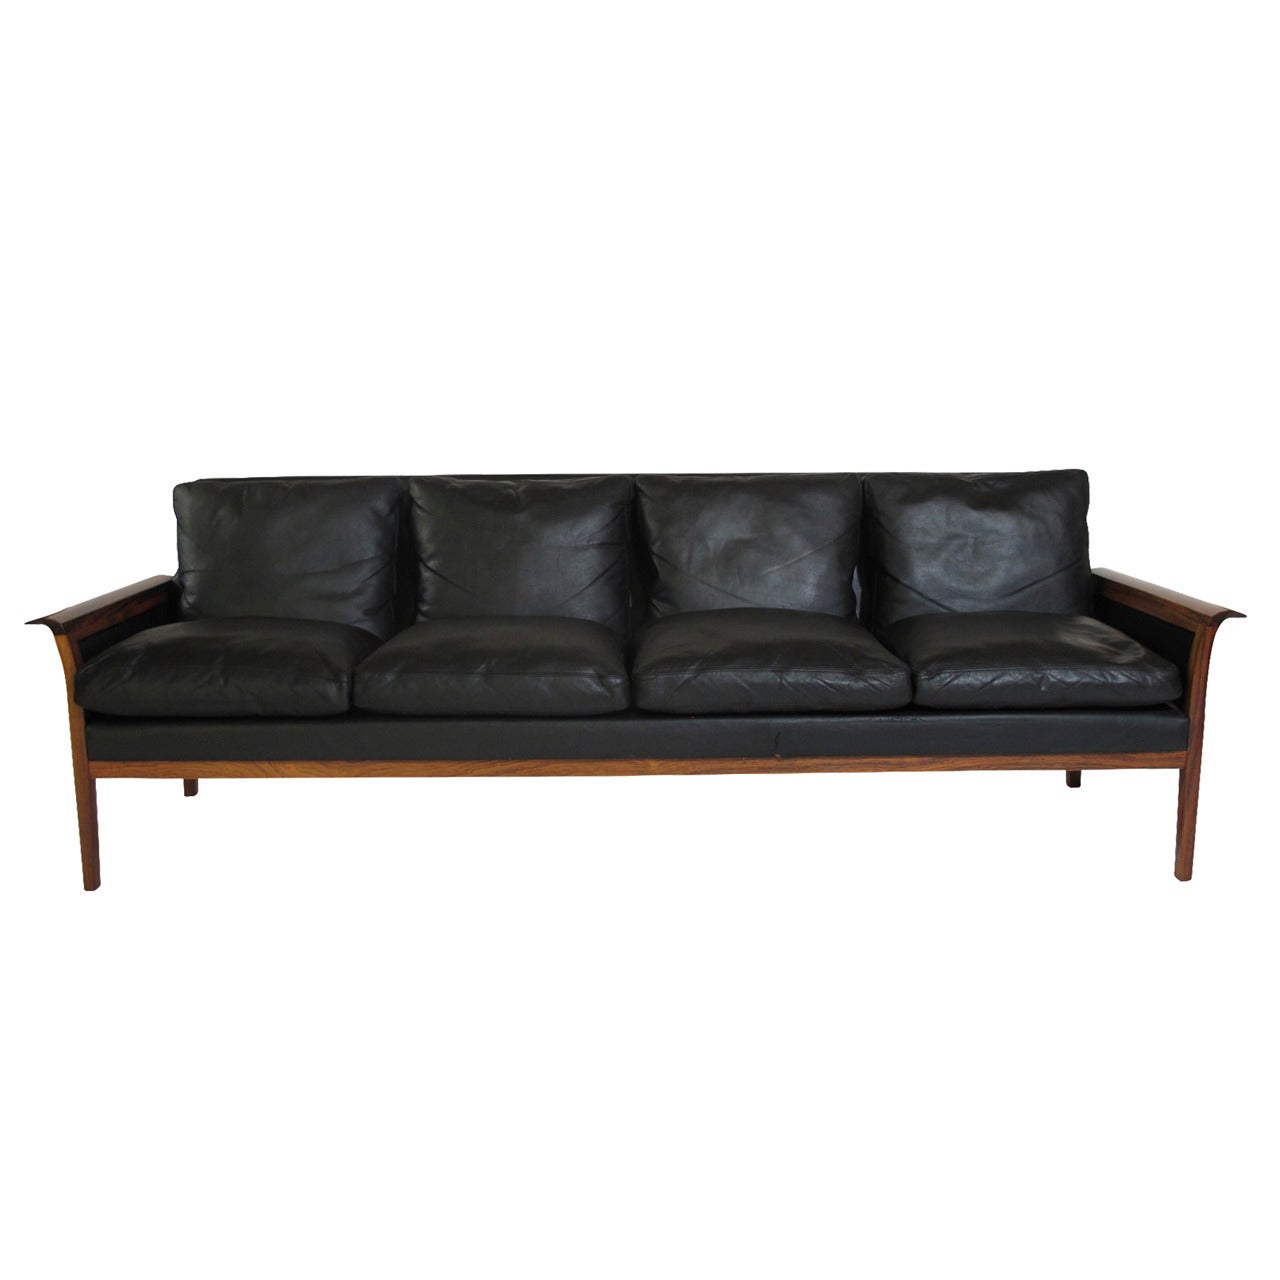 Danish Hans Olsen Rosewood Leather Sofa